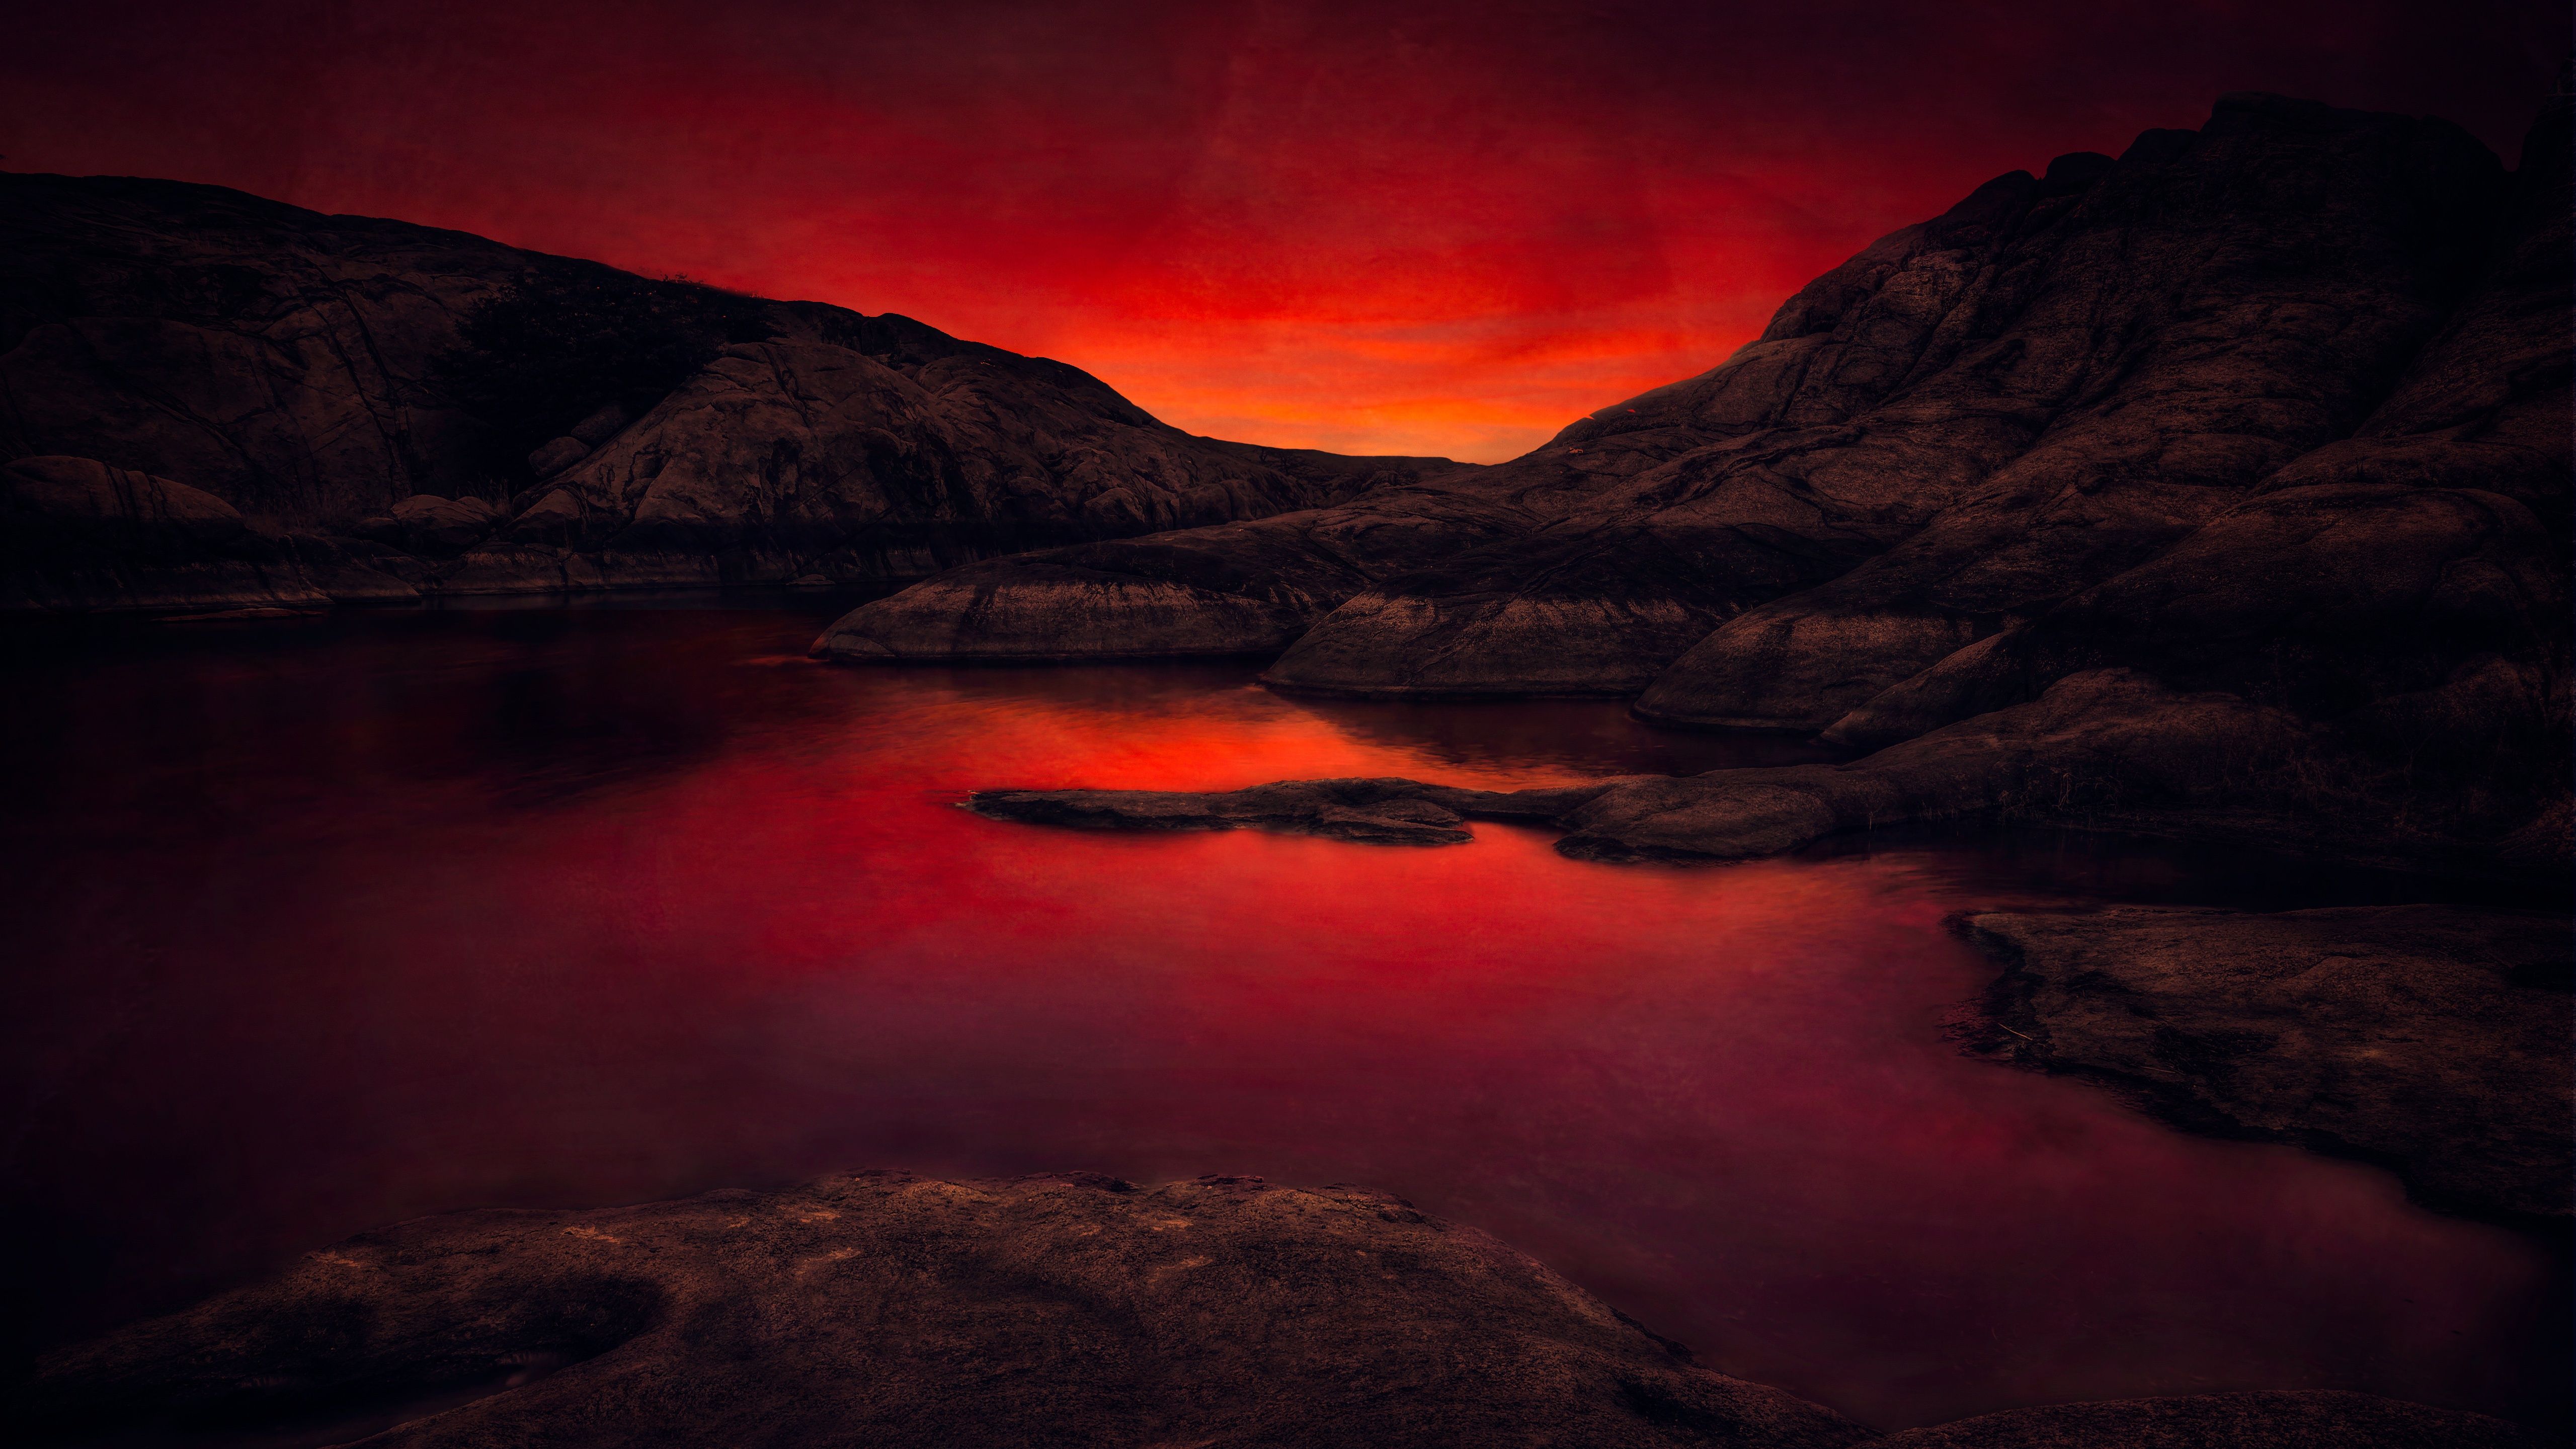 Orange Sunset, HD Nature, 4k Wallpaper, Image, Background